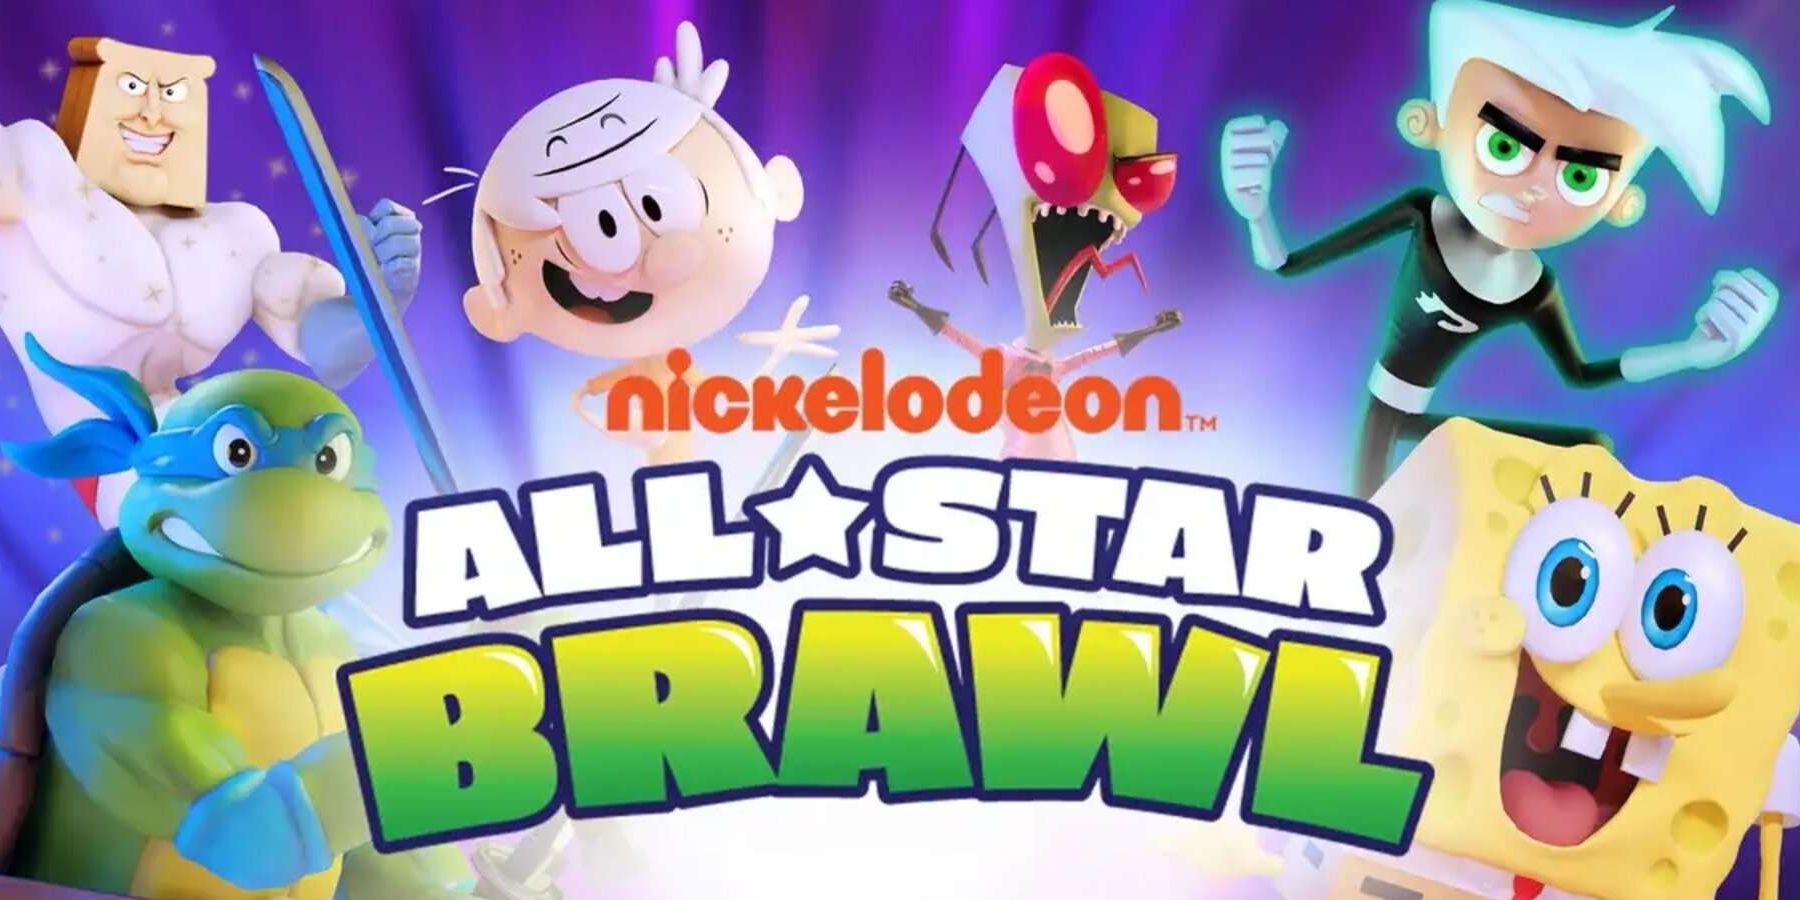 nickelodeon-all-star-brawl-ren-stimpy